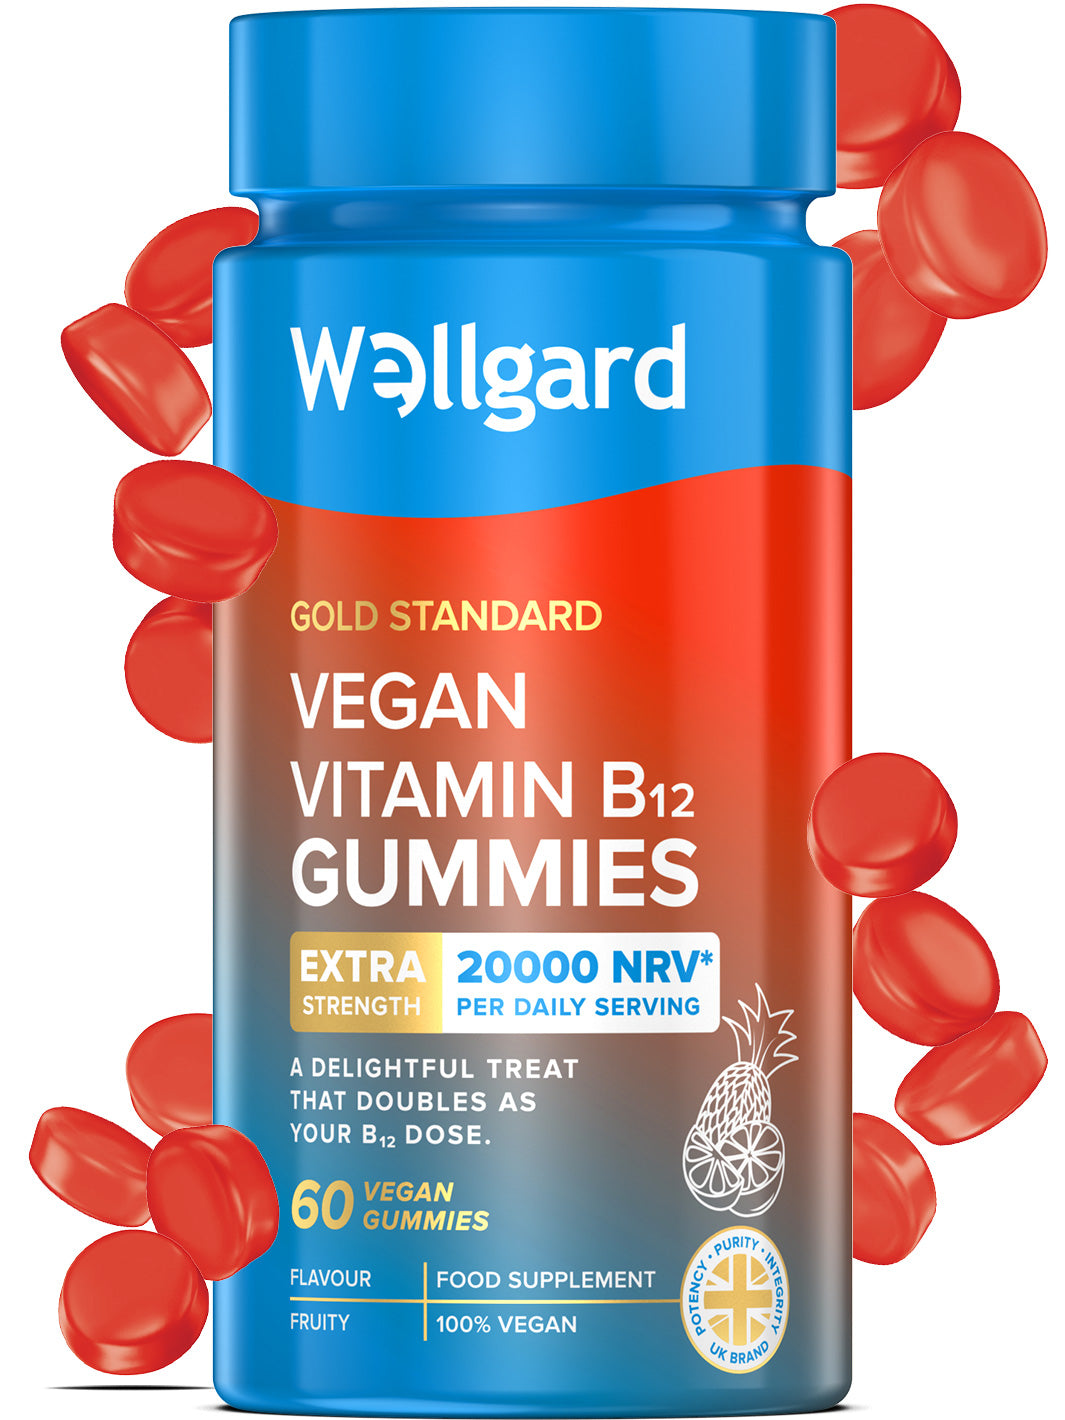 Vegan Vitamin B12 Gummies